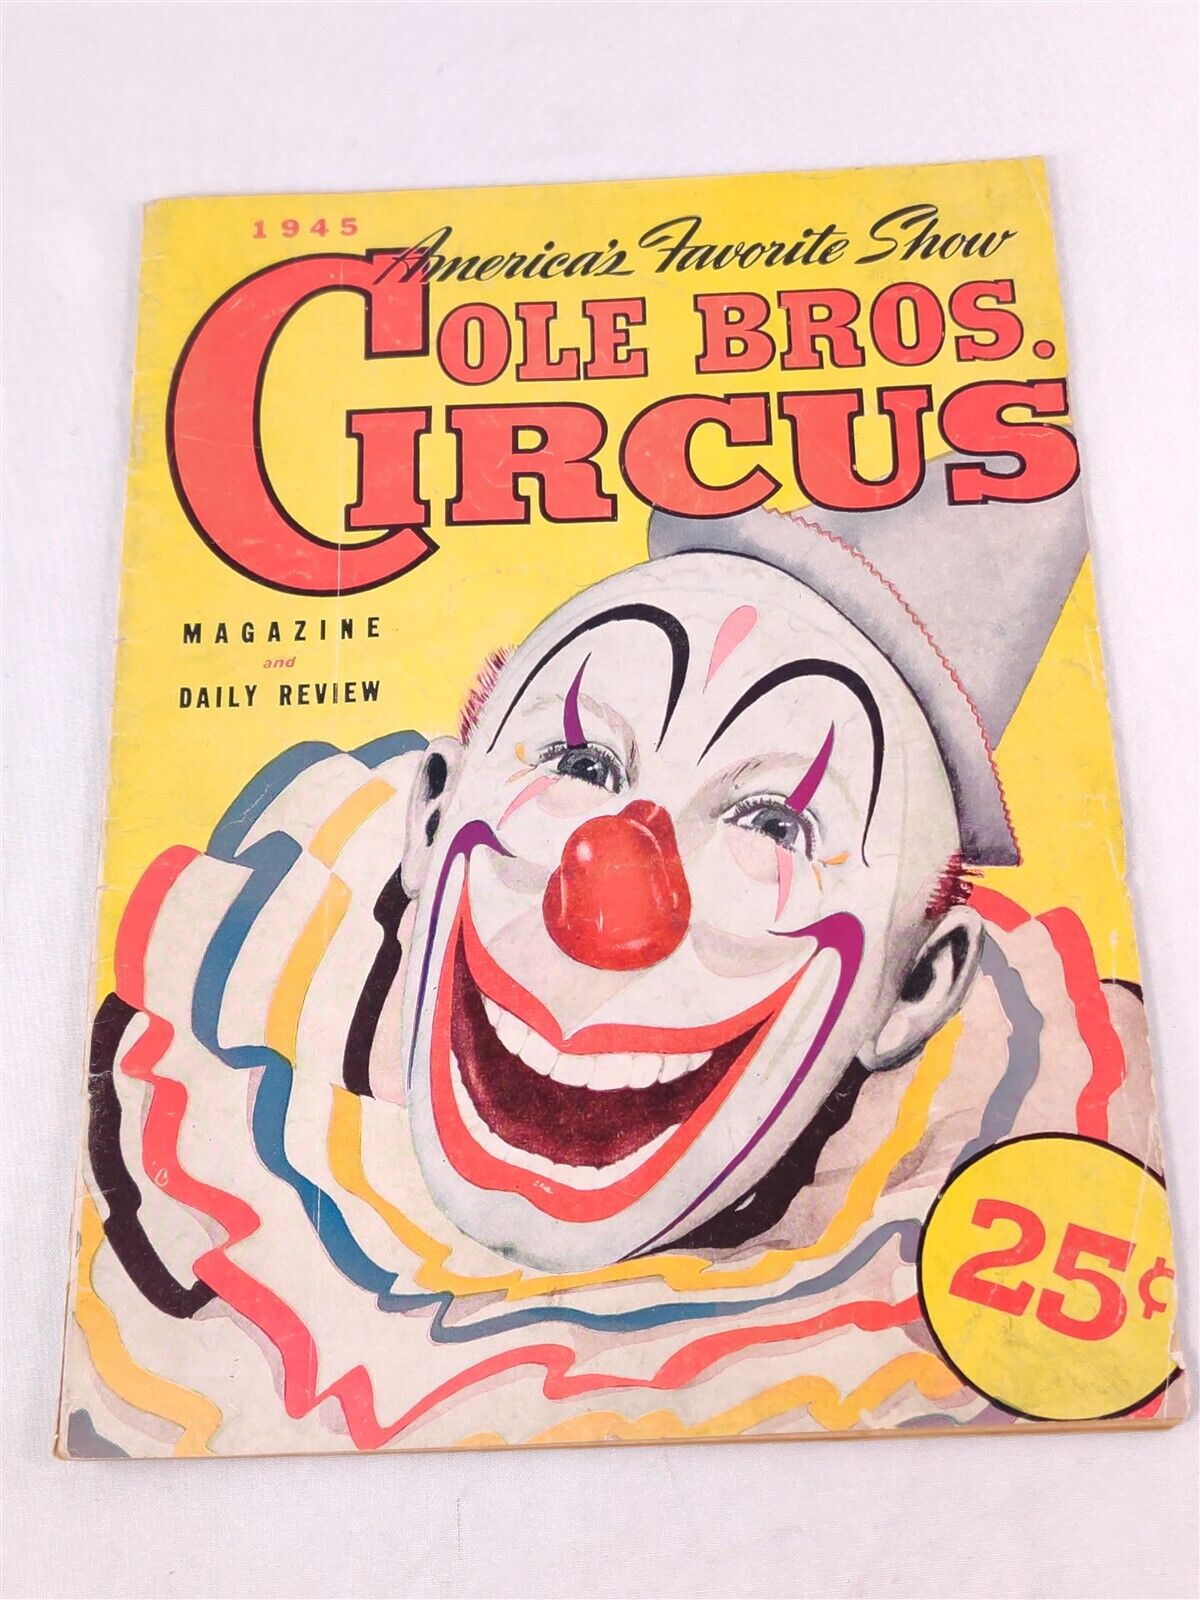 ✅ Circus Program 1945 Cole Bros Magazine Daily Review Souvenir Vintage